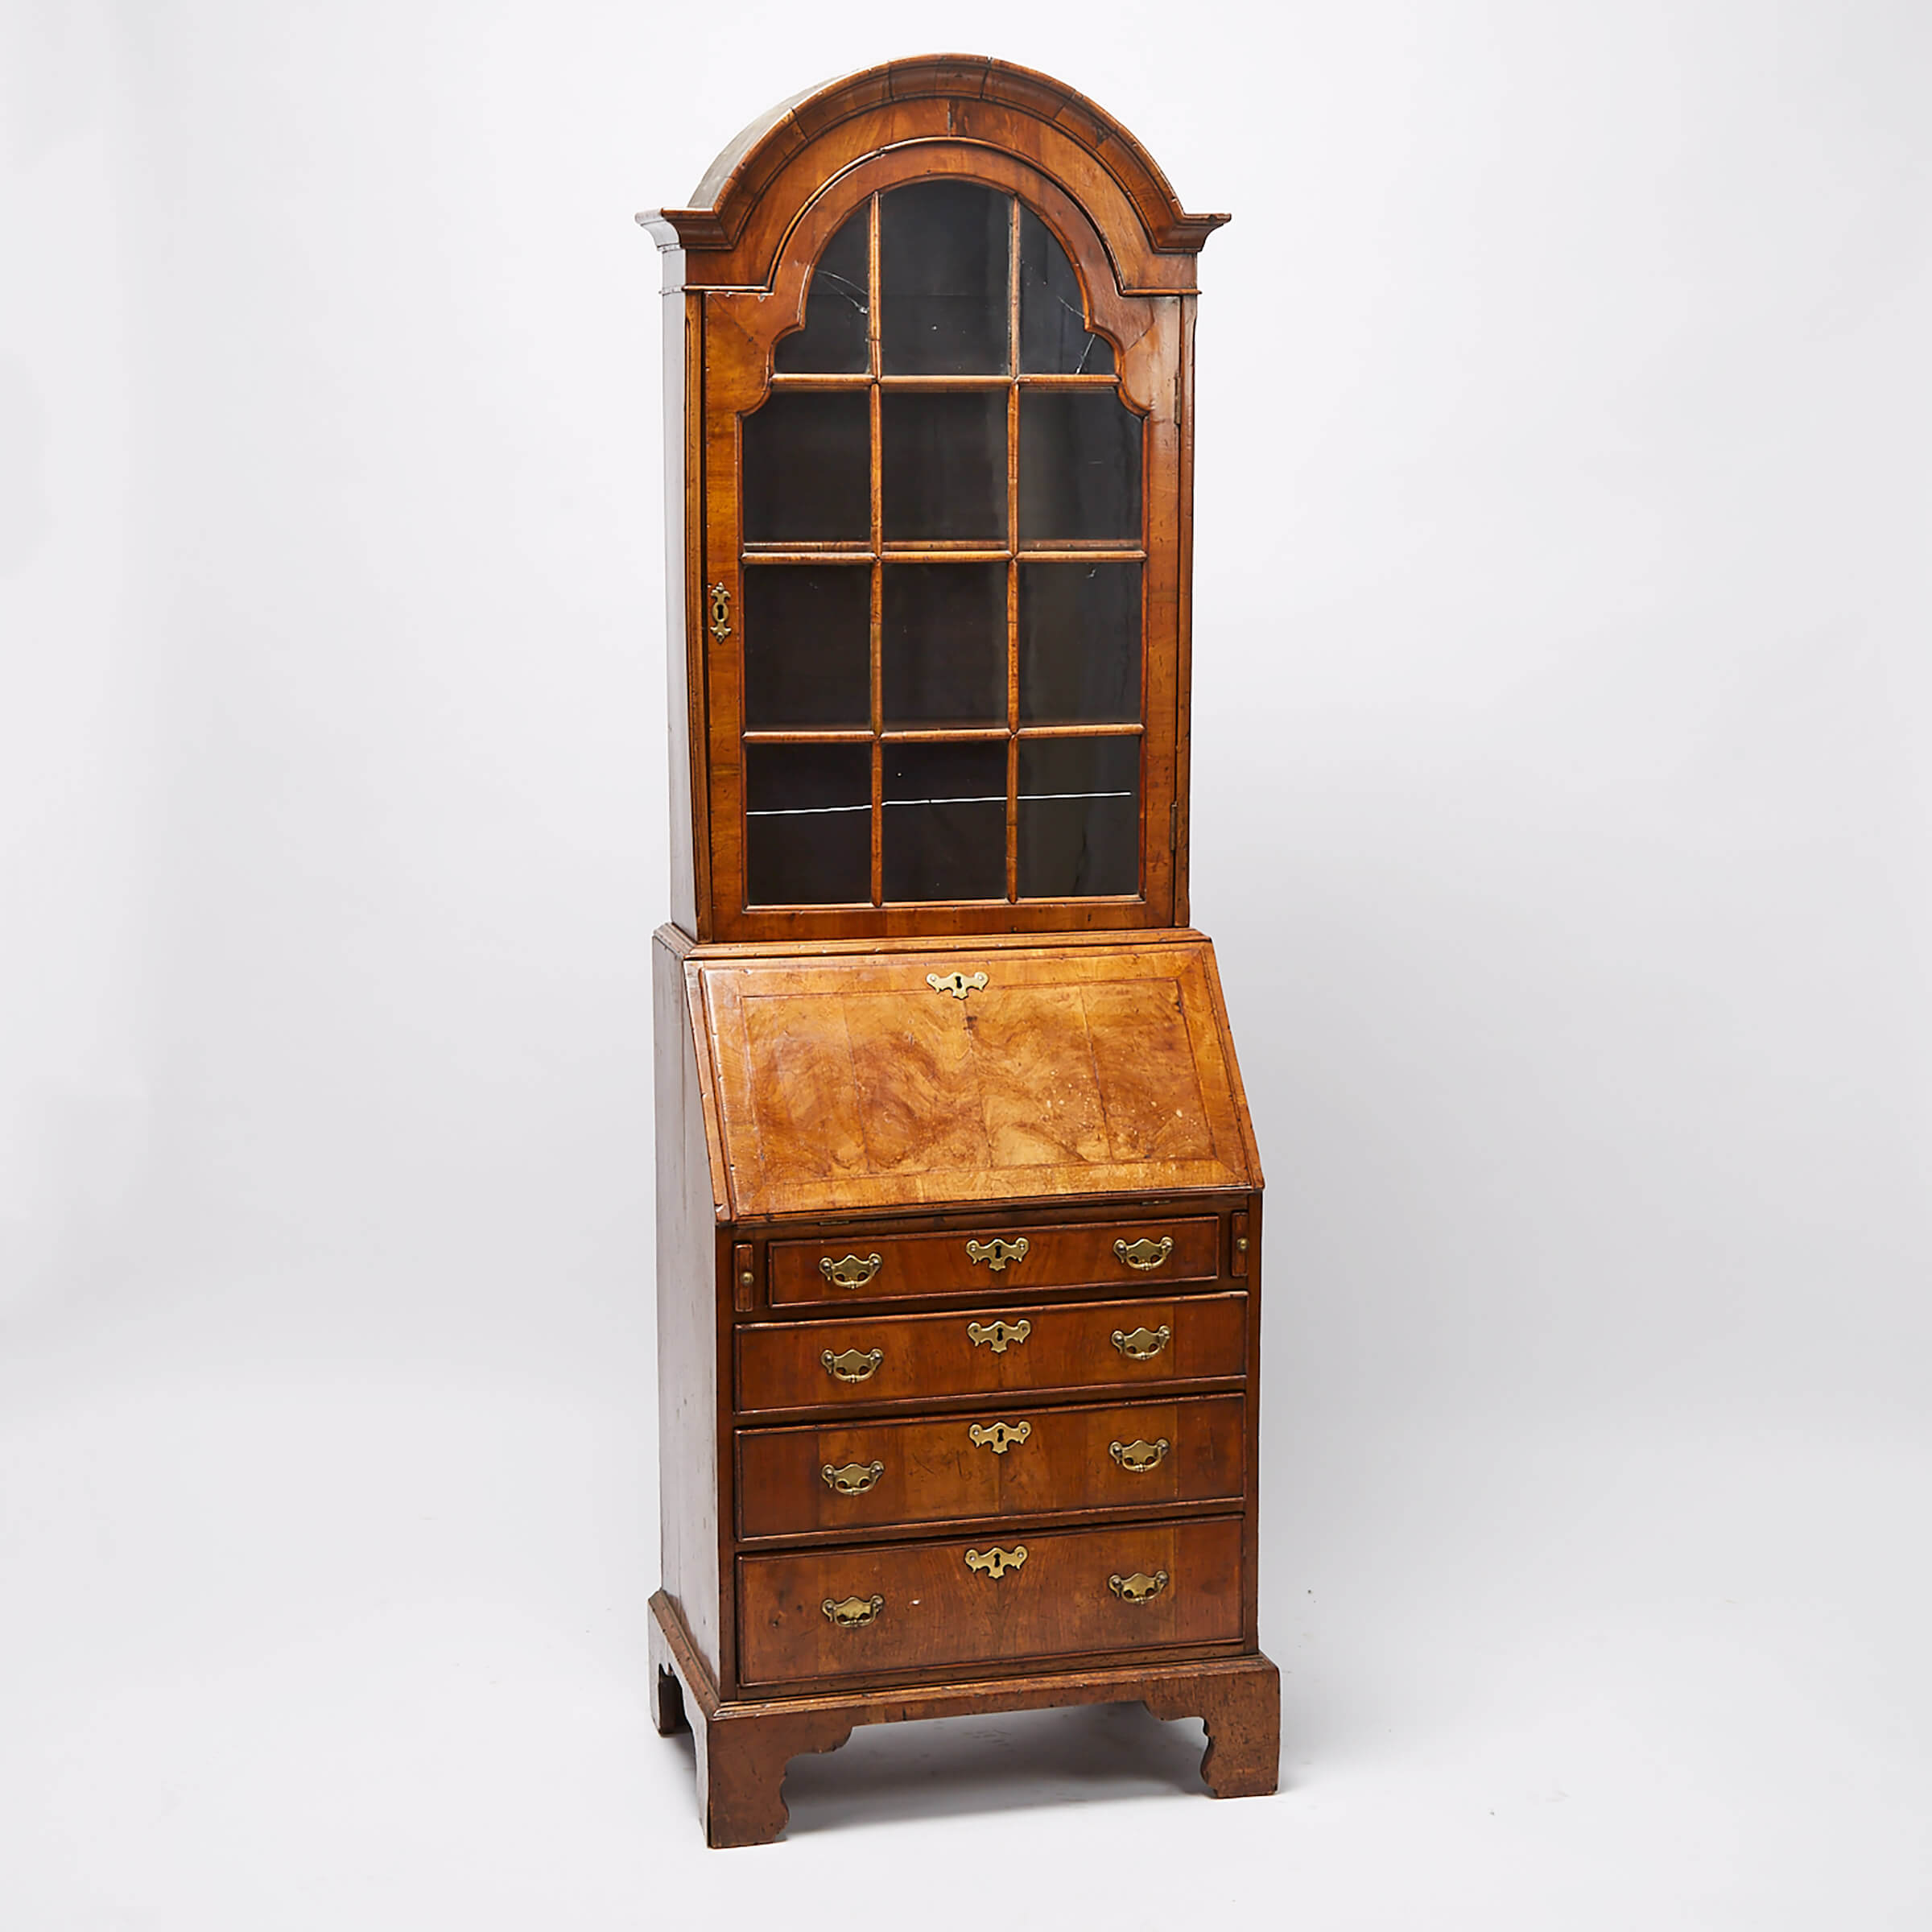 Small Queen Anne Style Figured Walnut Secretary Bookcase, 19th century